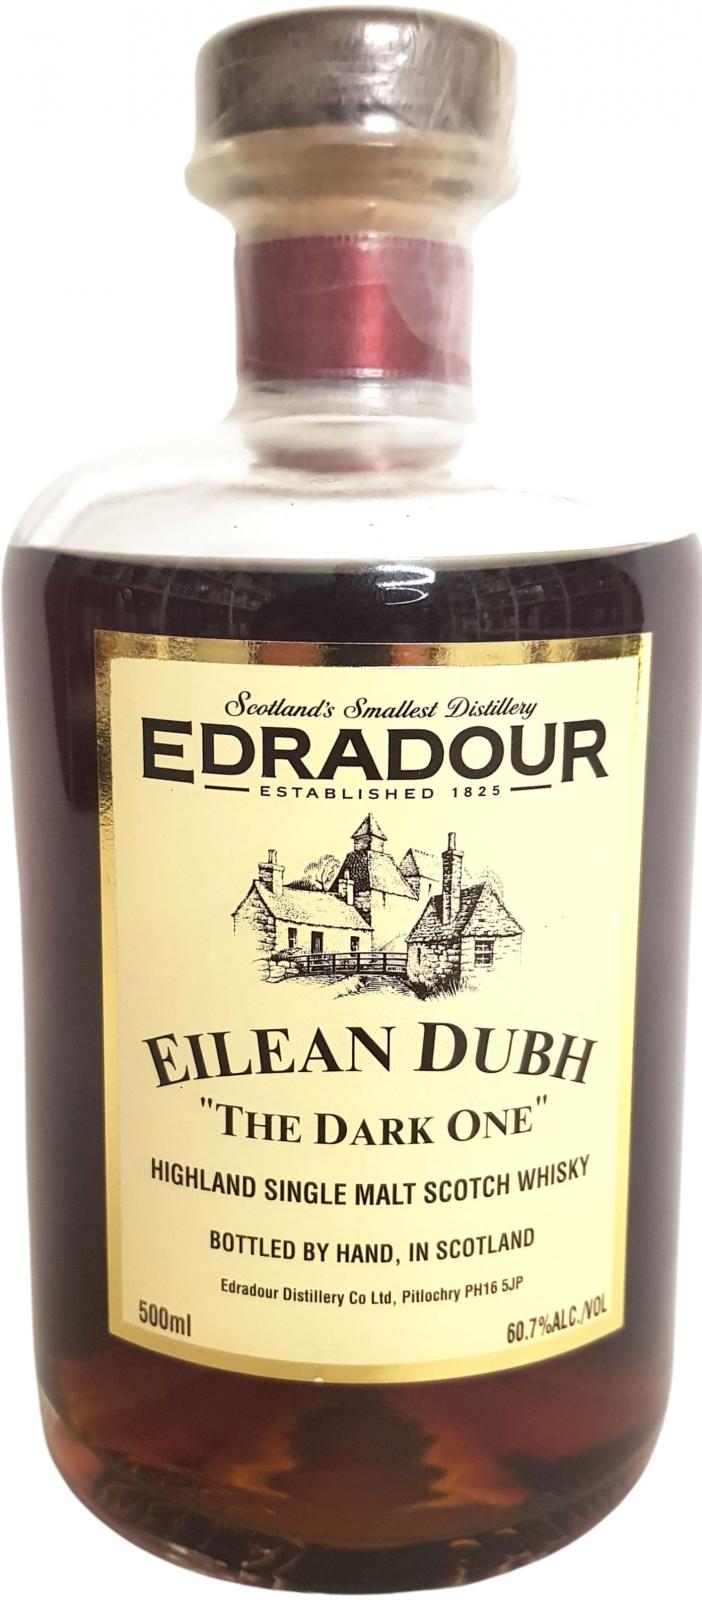 Edradour Eilean Dubh The Dark One Straight From The Cask 60.7% 500ml